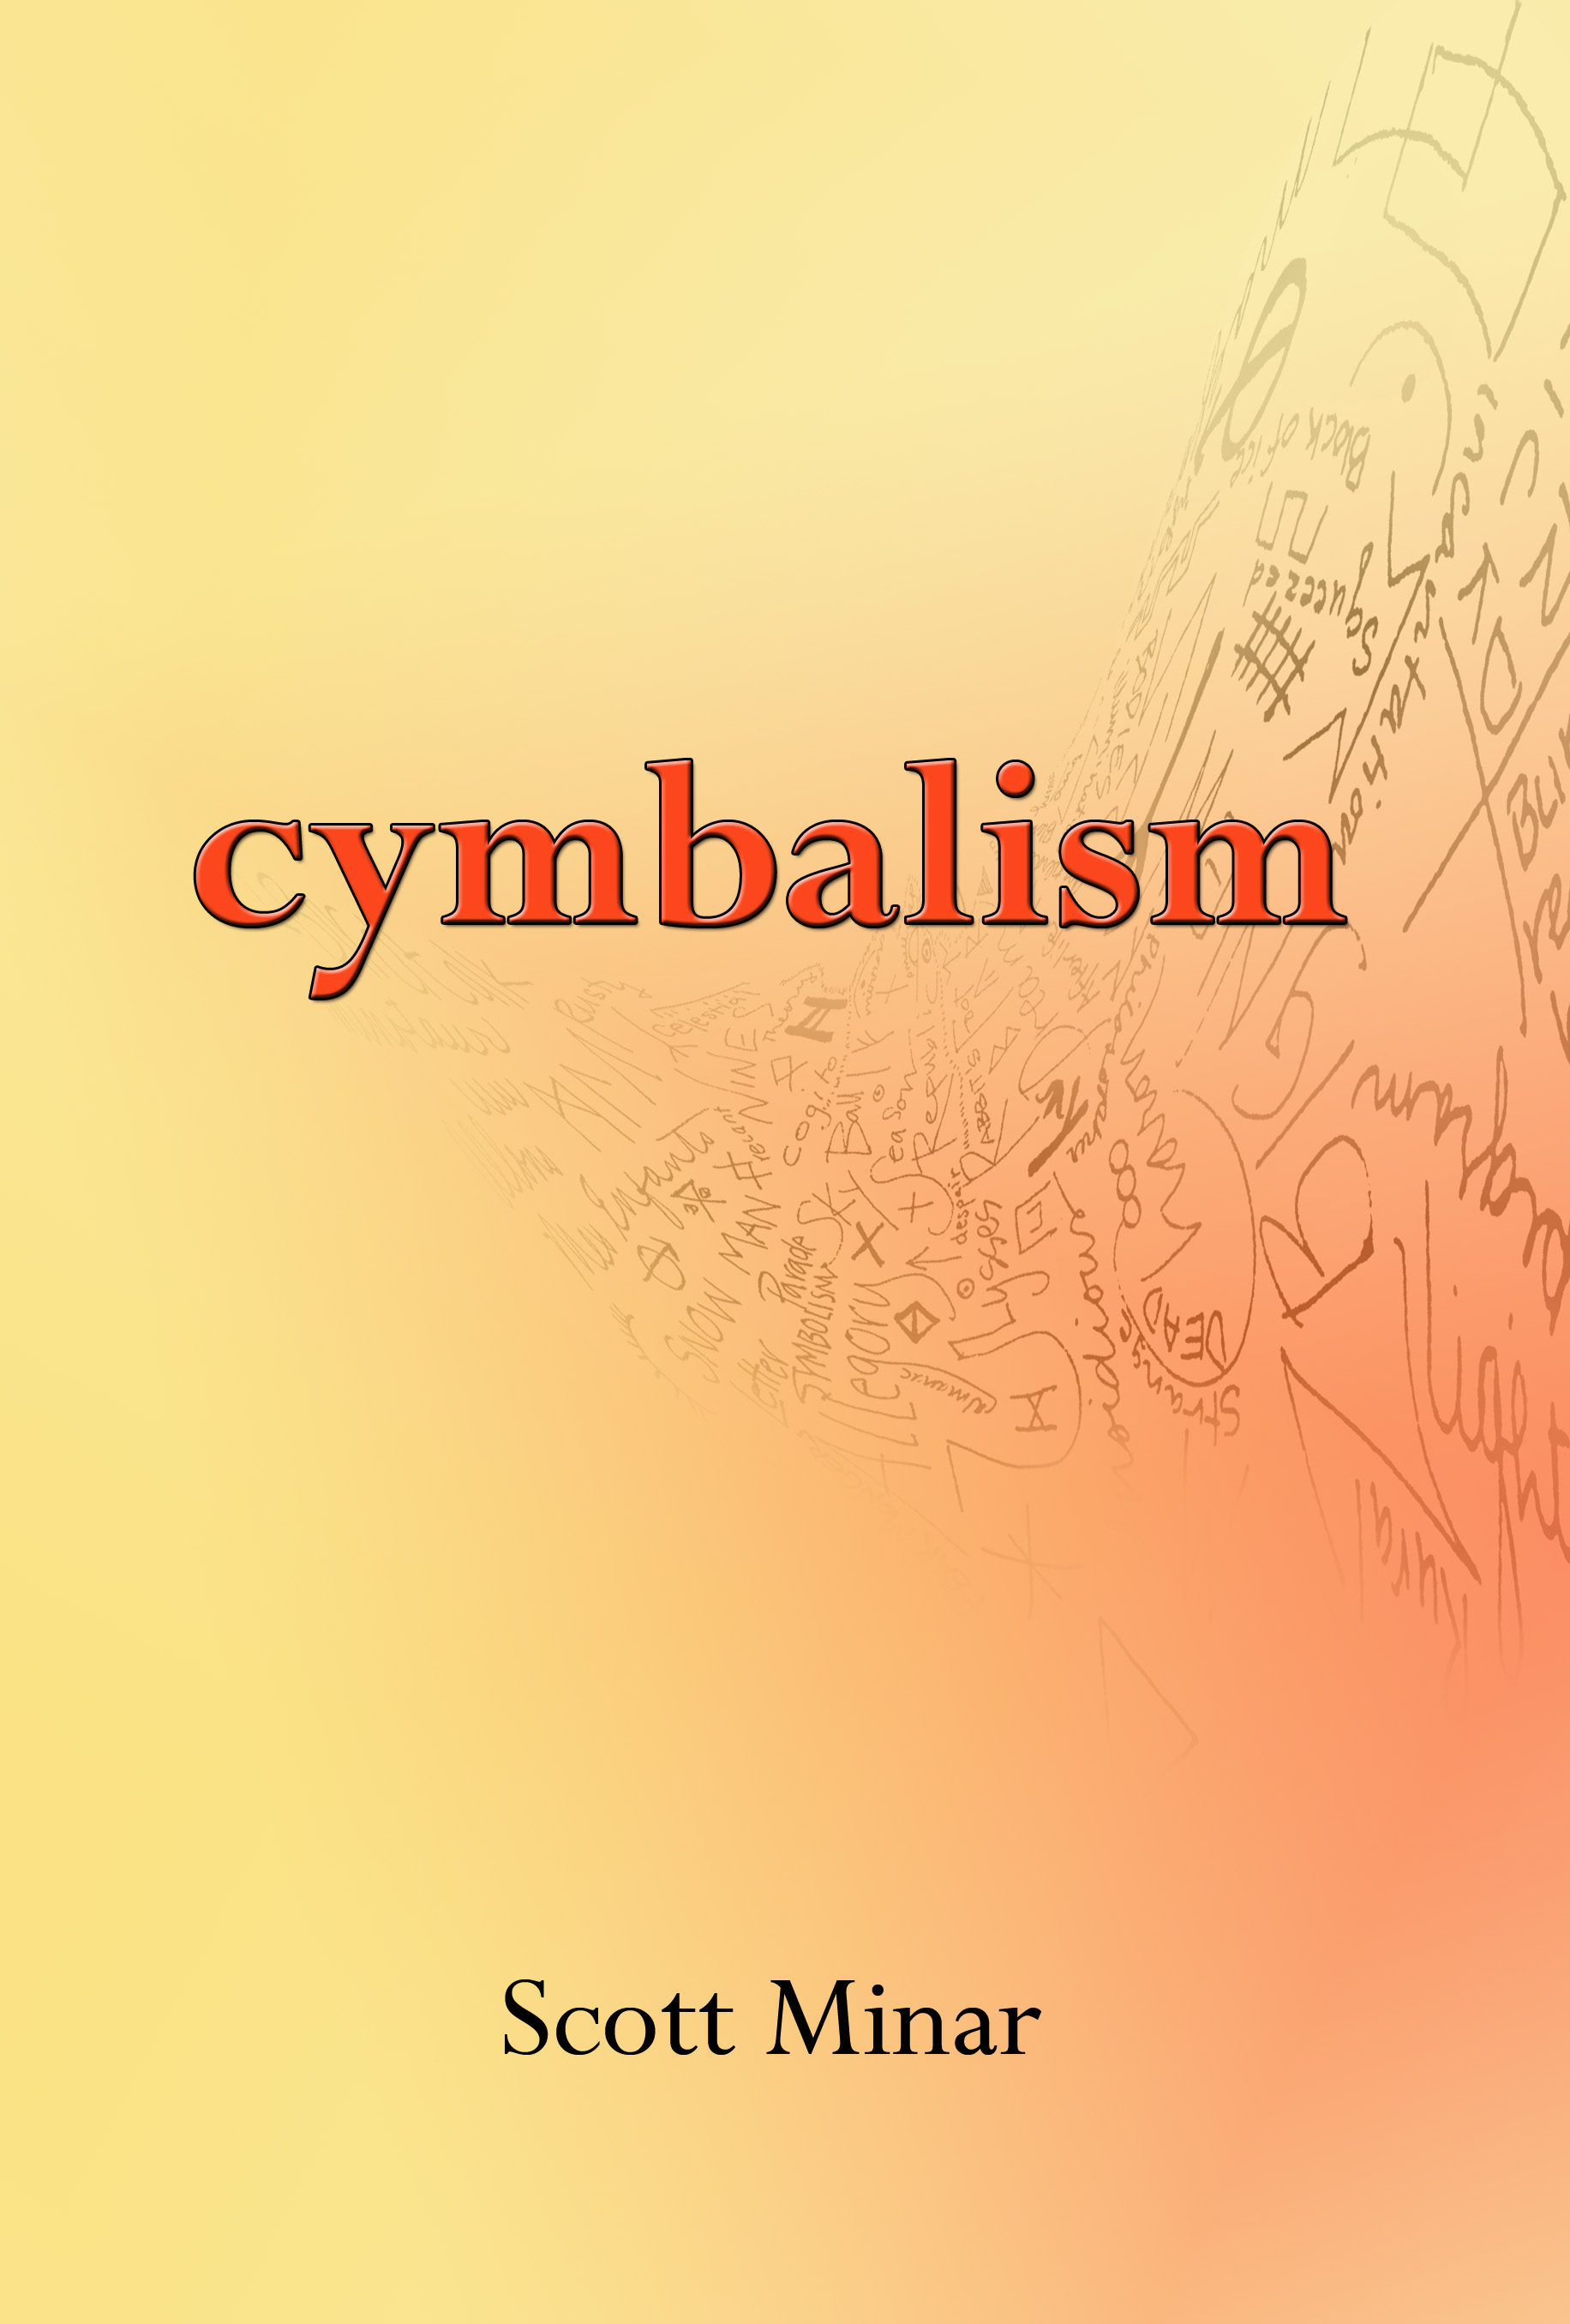 Cymbalism